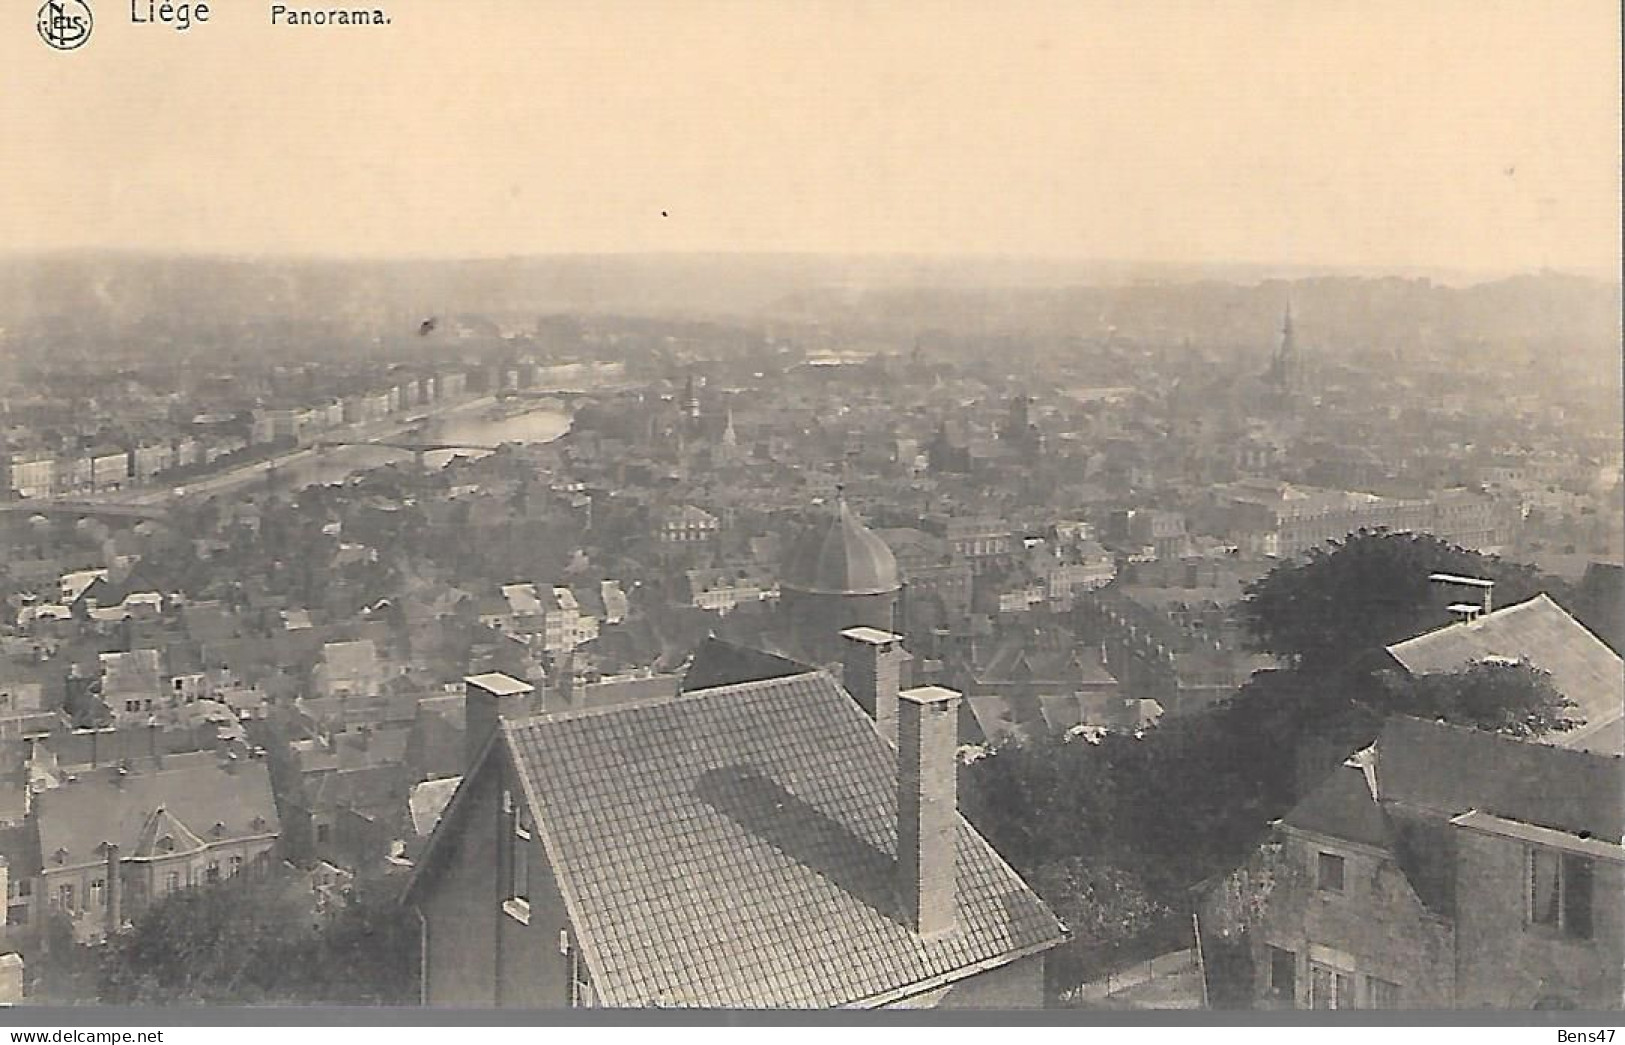 Liège Panorama - Liege